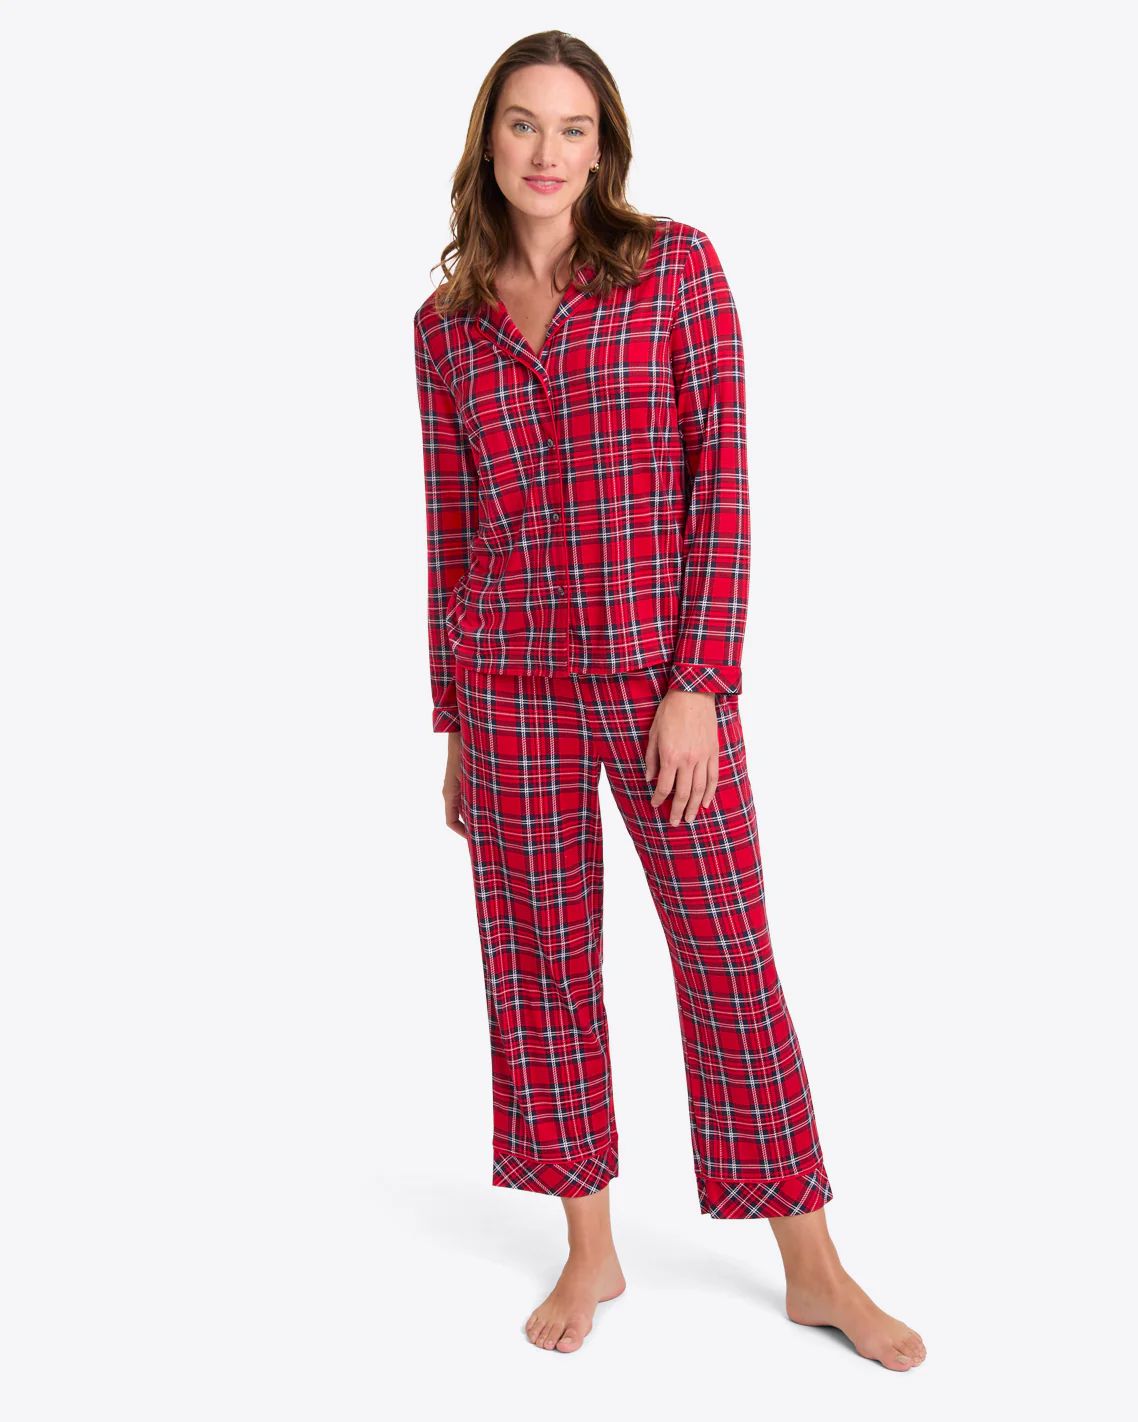 Linda Long Sleeve Pajama Set in Angie Plaid | Draper James (US)